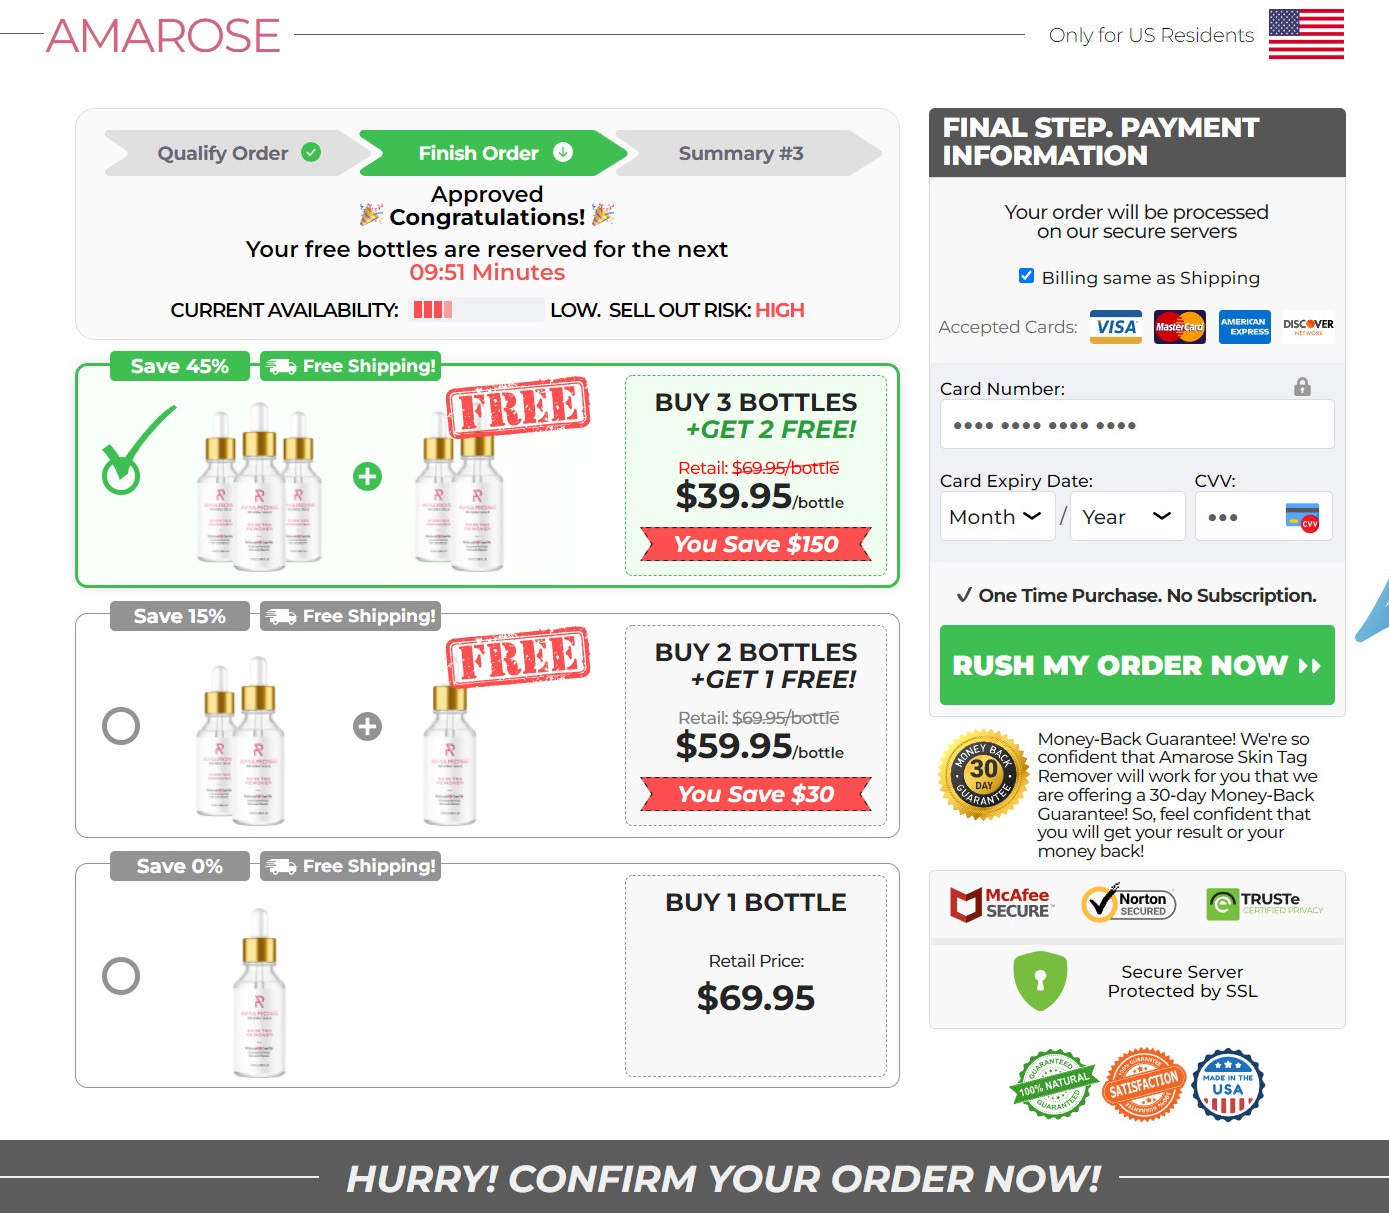 Amarose Skin Tag Remover Pricing